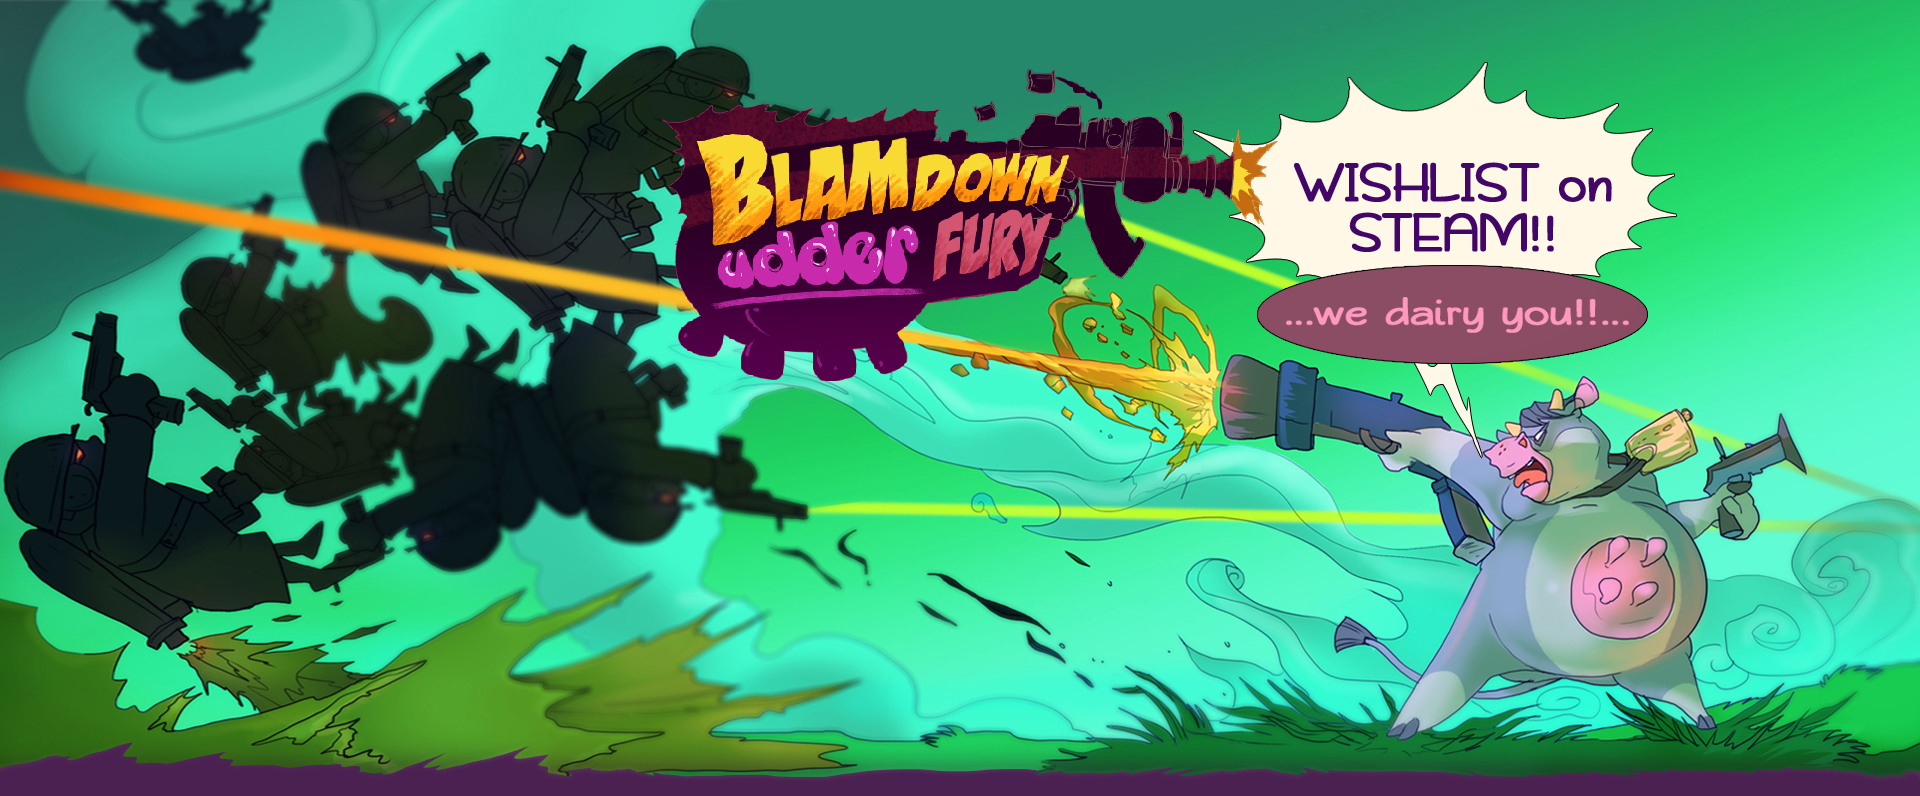 Blamdown Udder Fury - Prototype